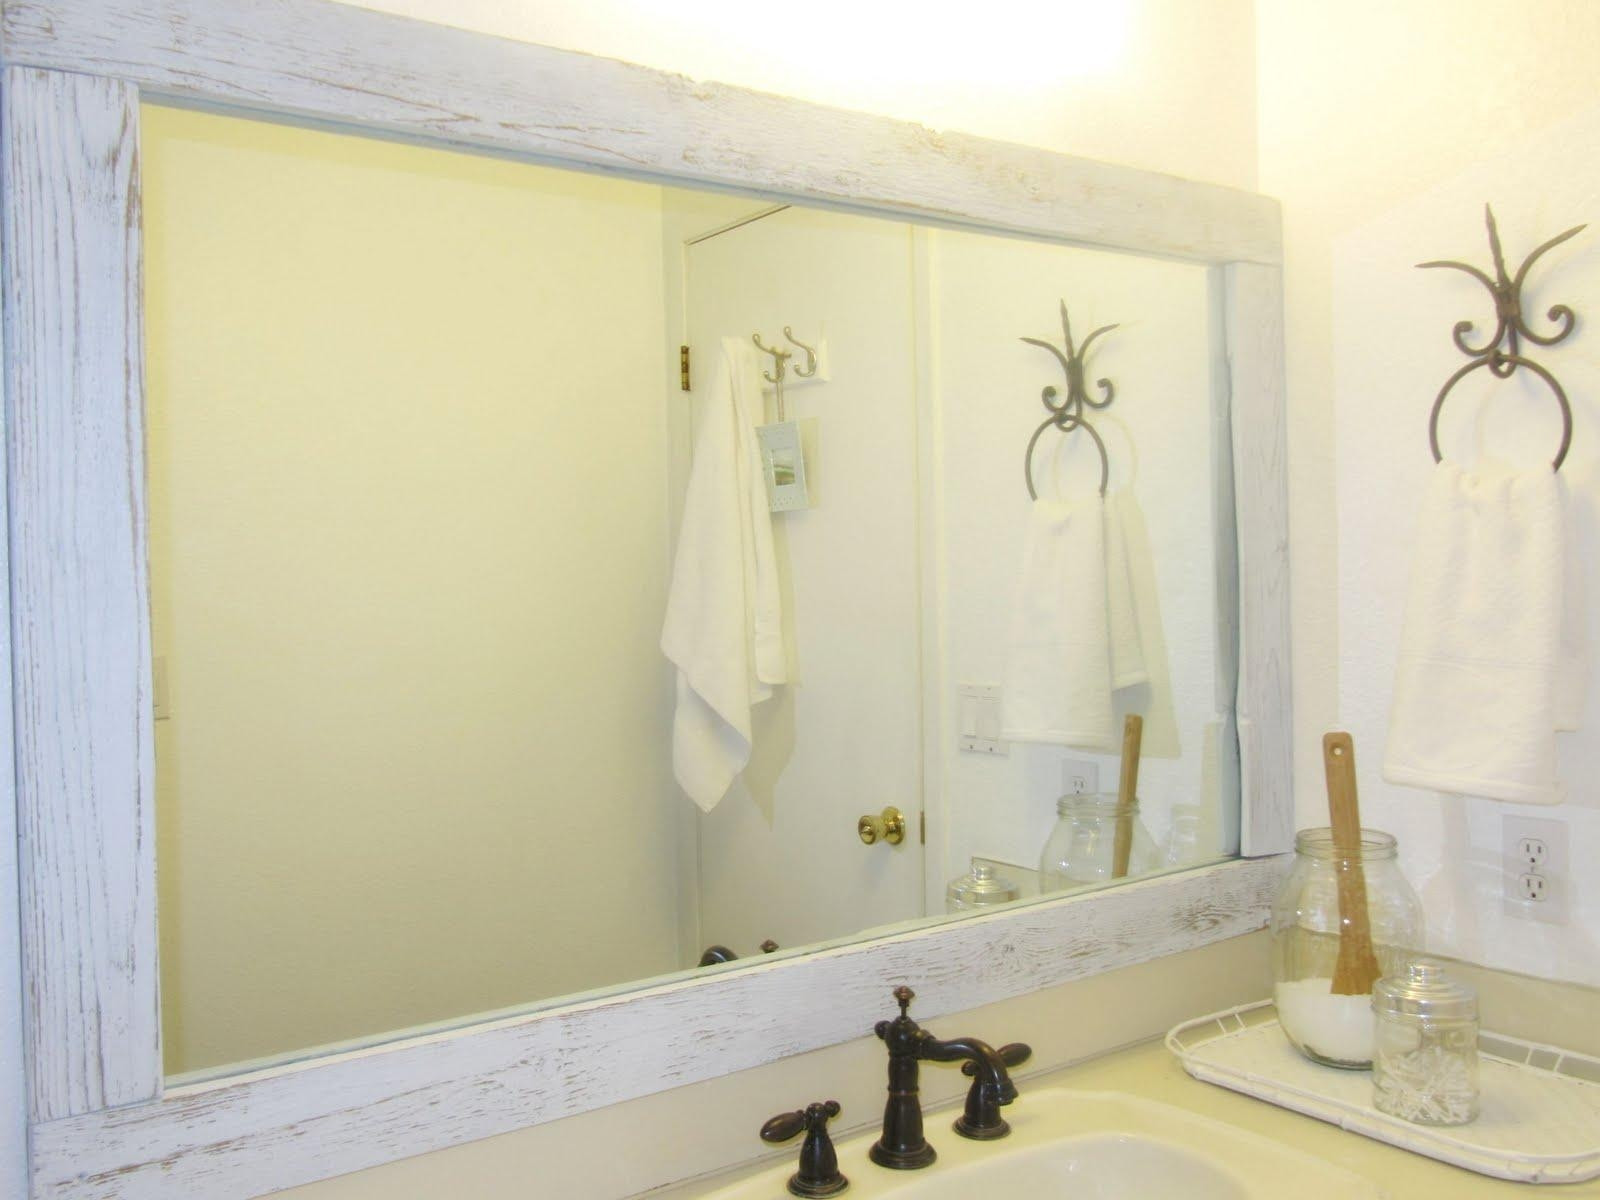 Framed Bathroom Mirror Ideas
 20 Best Ideas Wall Mirrors for Bathrooms